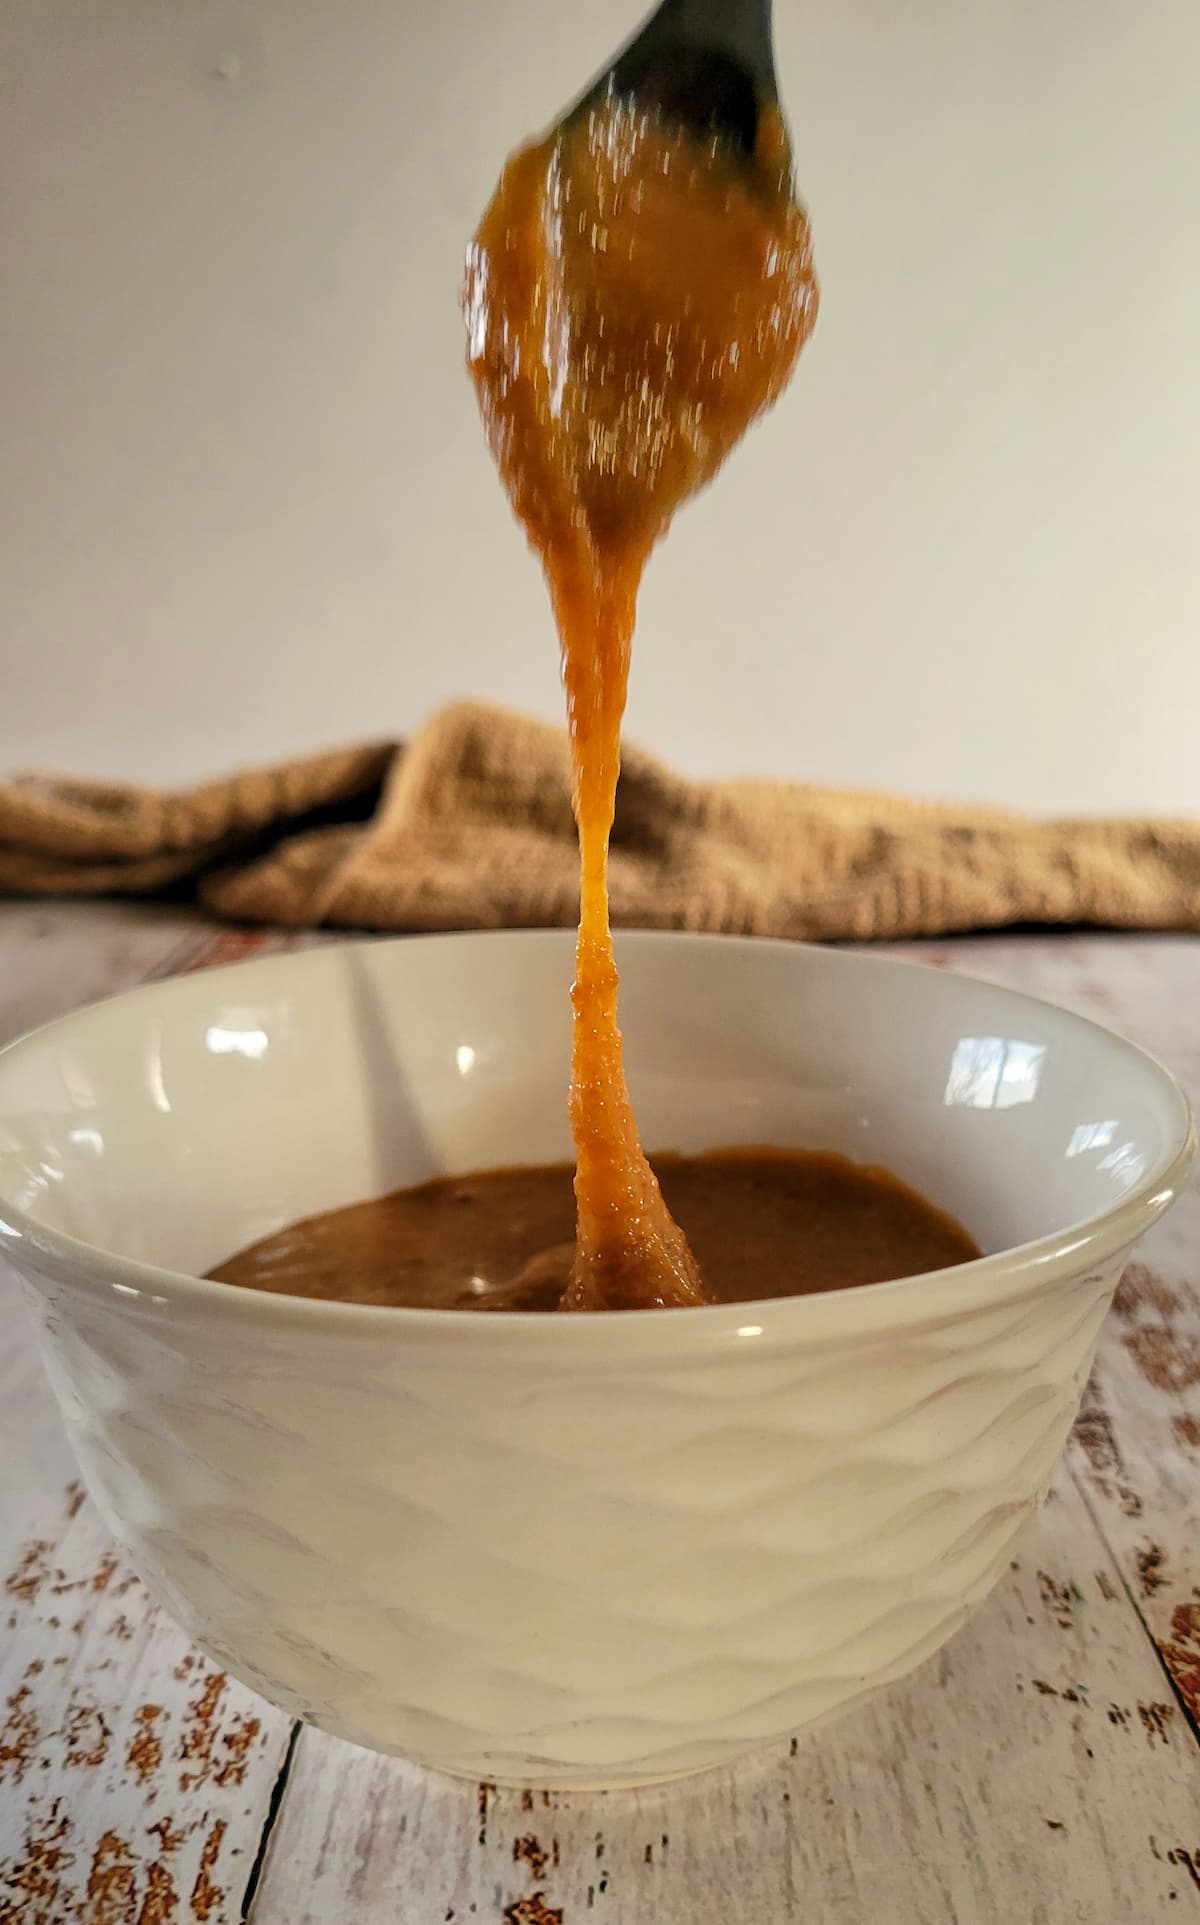 caramel sauce dripping into a bowl